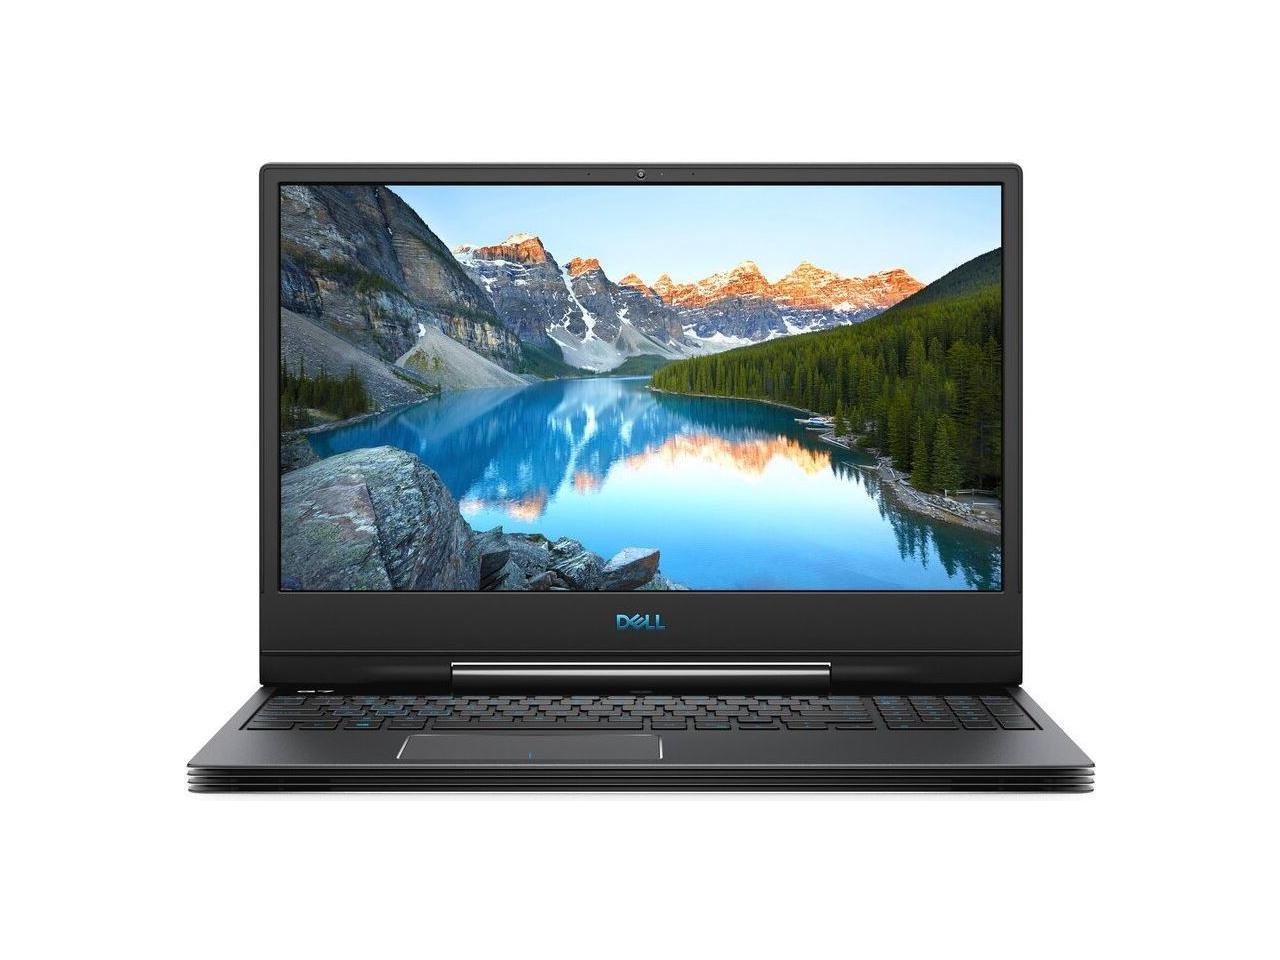 Dell G7 15 7590 Gaming Laptop: Core i7-8750H, NVidia RTX 2060, 128GB SSD +  1TB HDD, 15.6" Full HD IPS Display, 8GB RAM - Klick Online